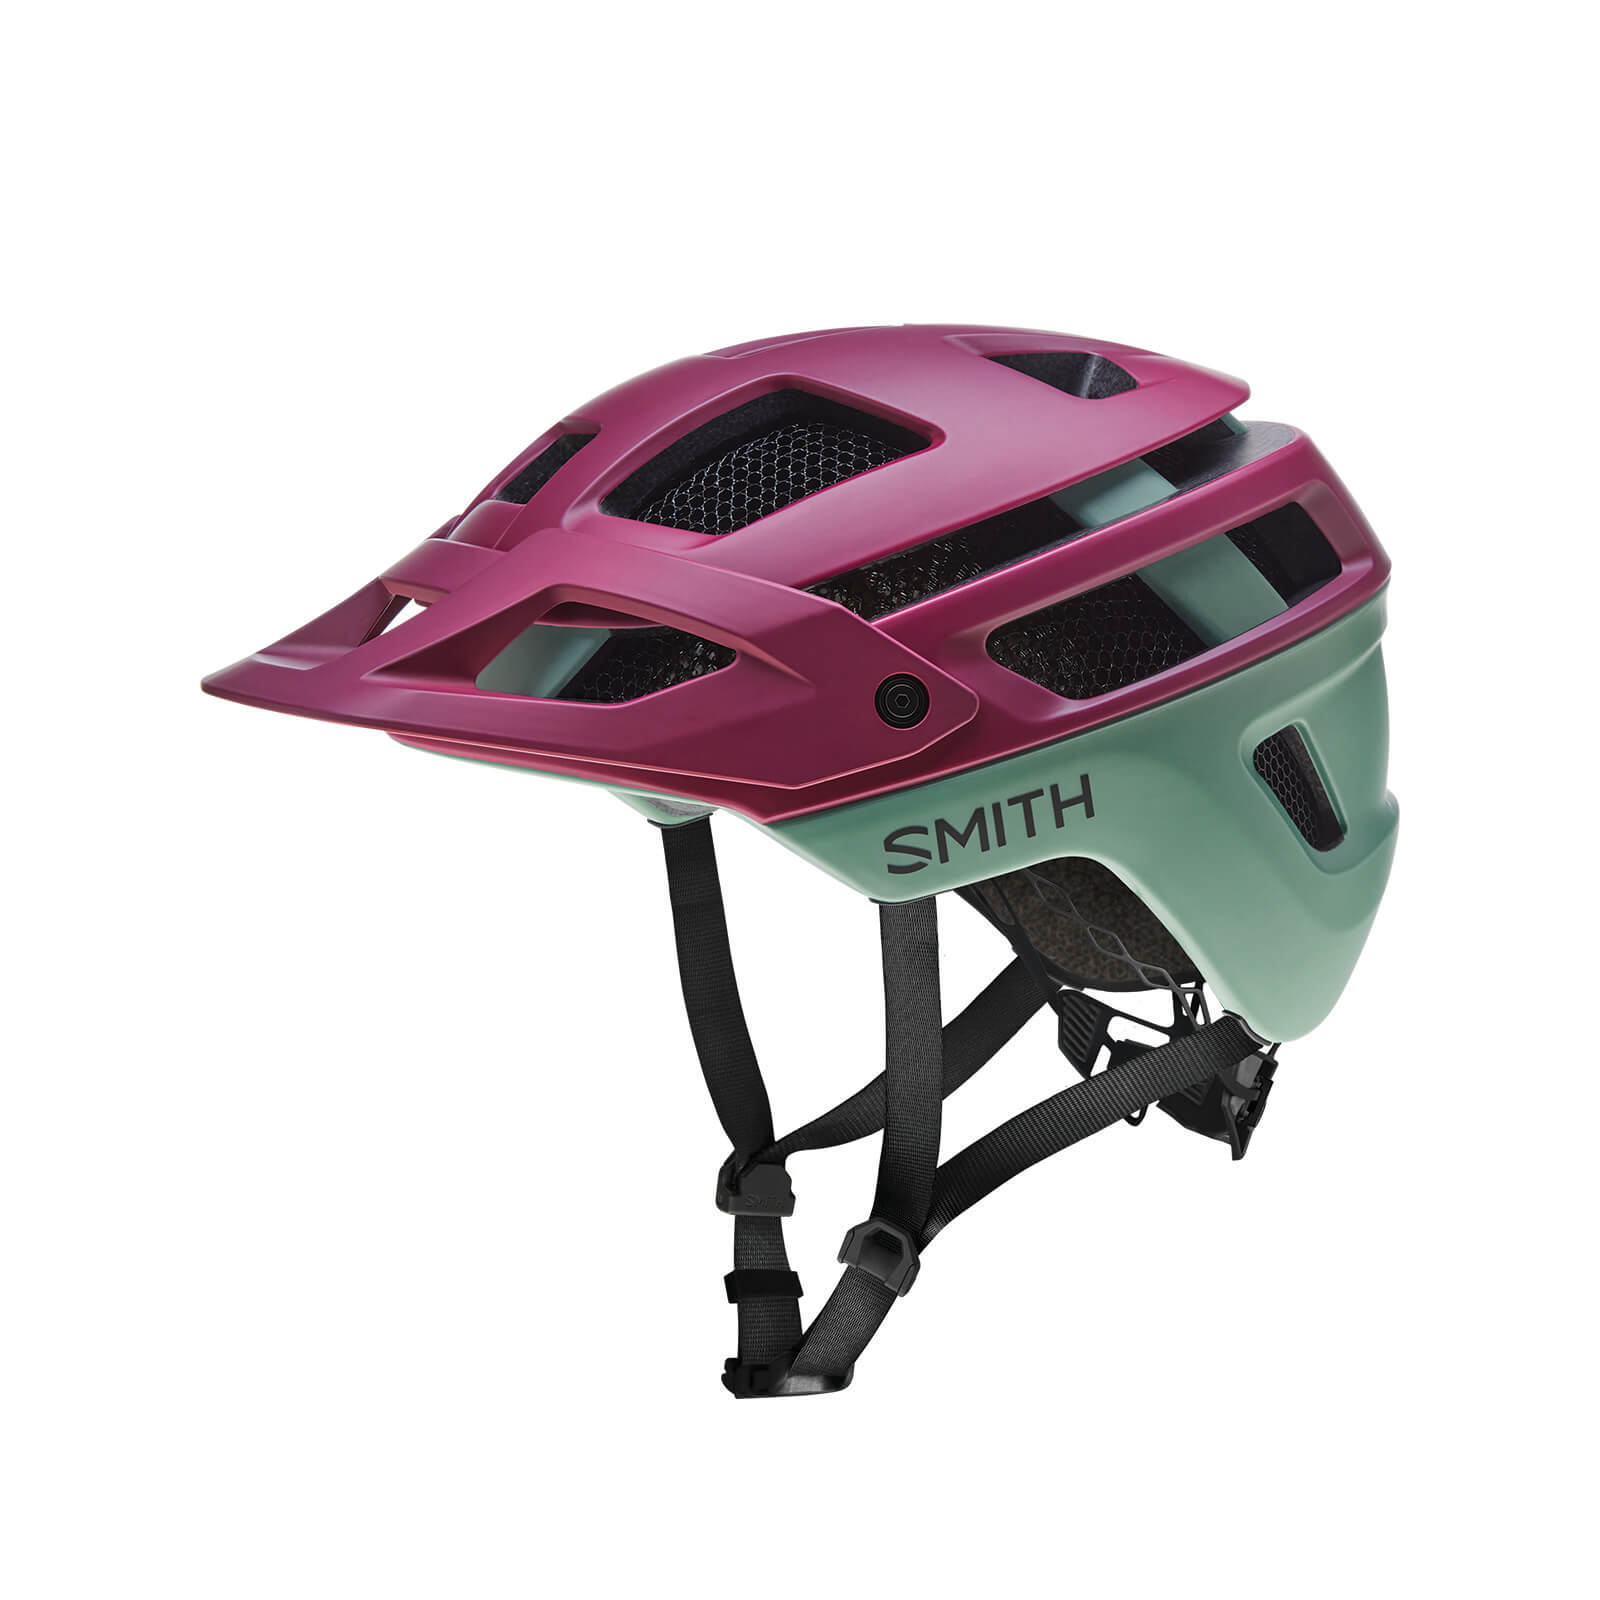 Smith Forefront 2 MIPS MTB Helmet - Large - Matte Merlot Aloe